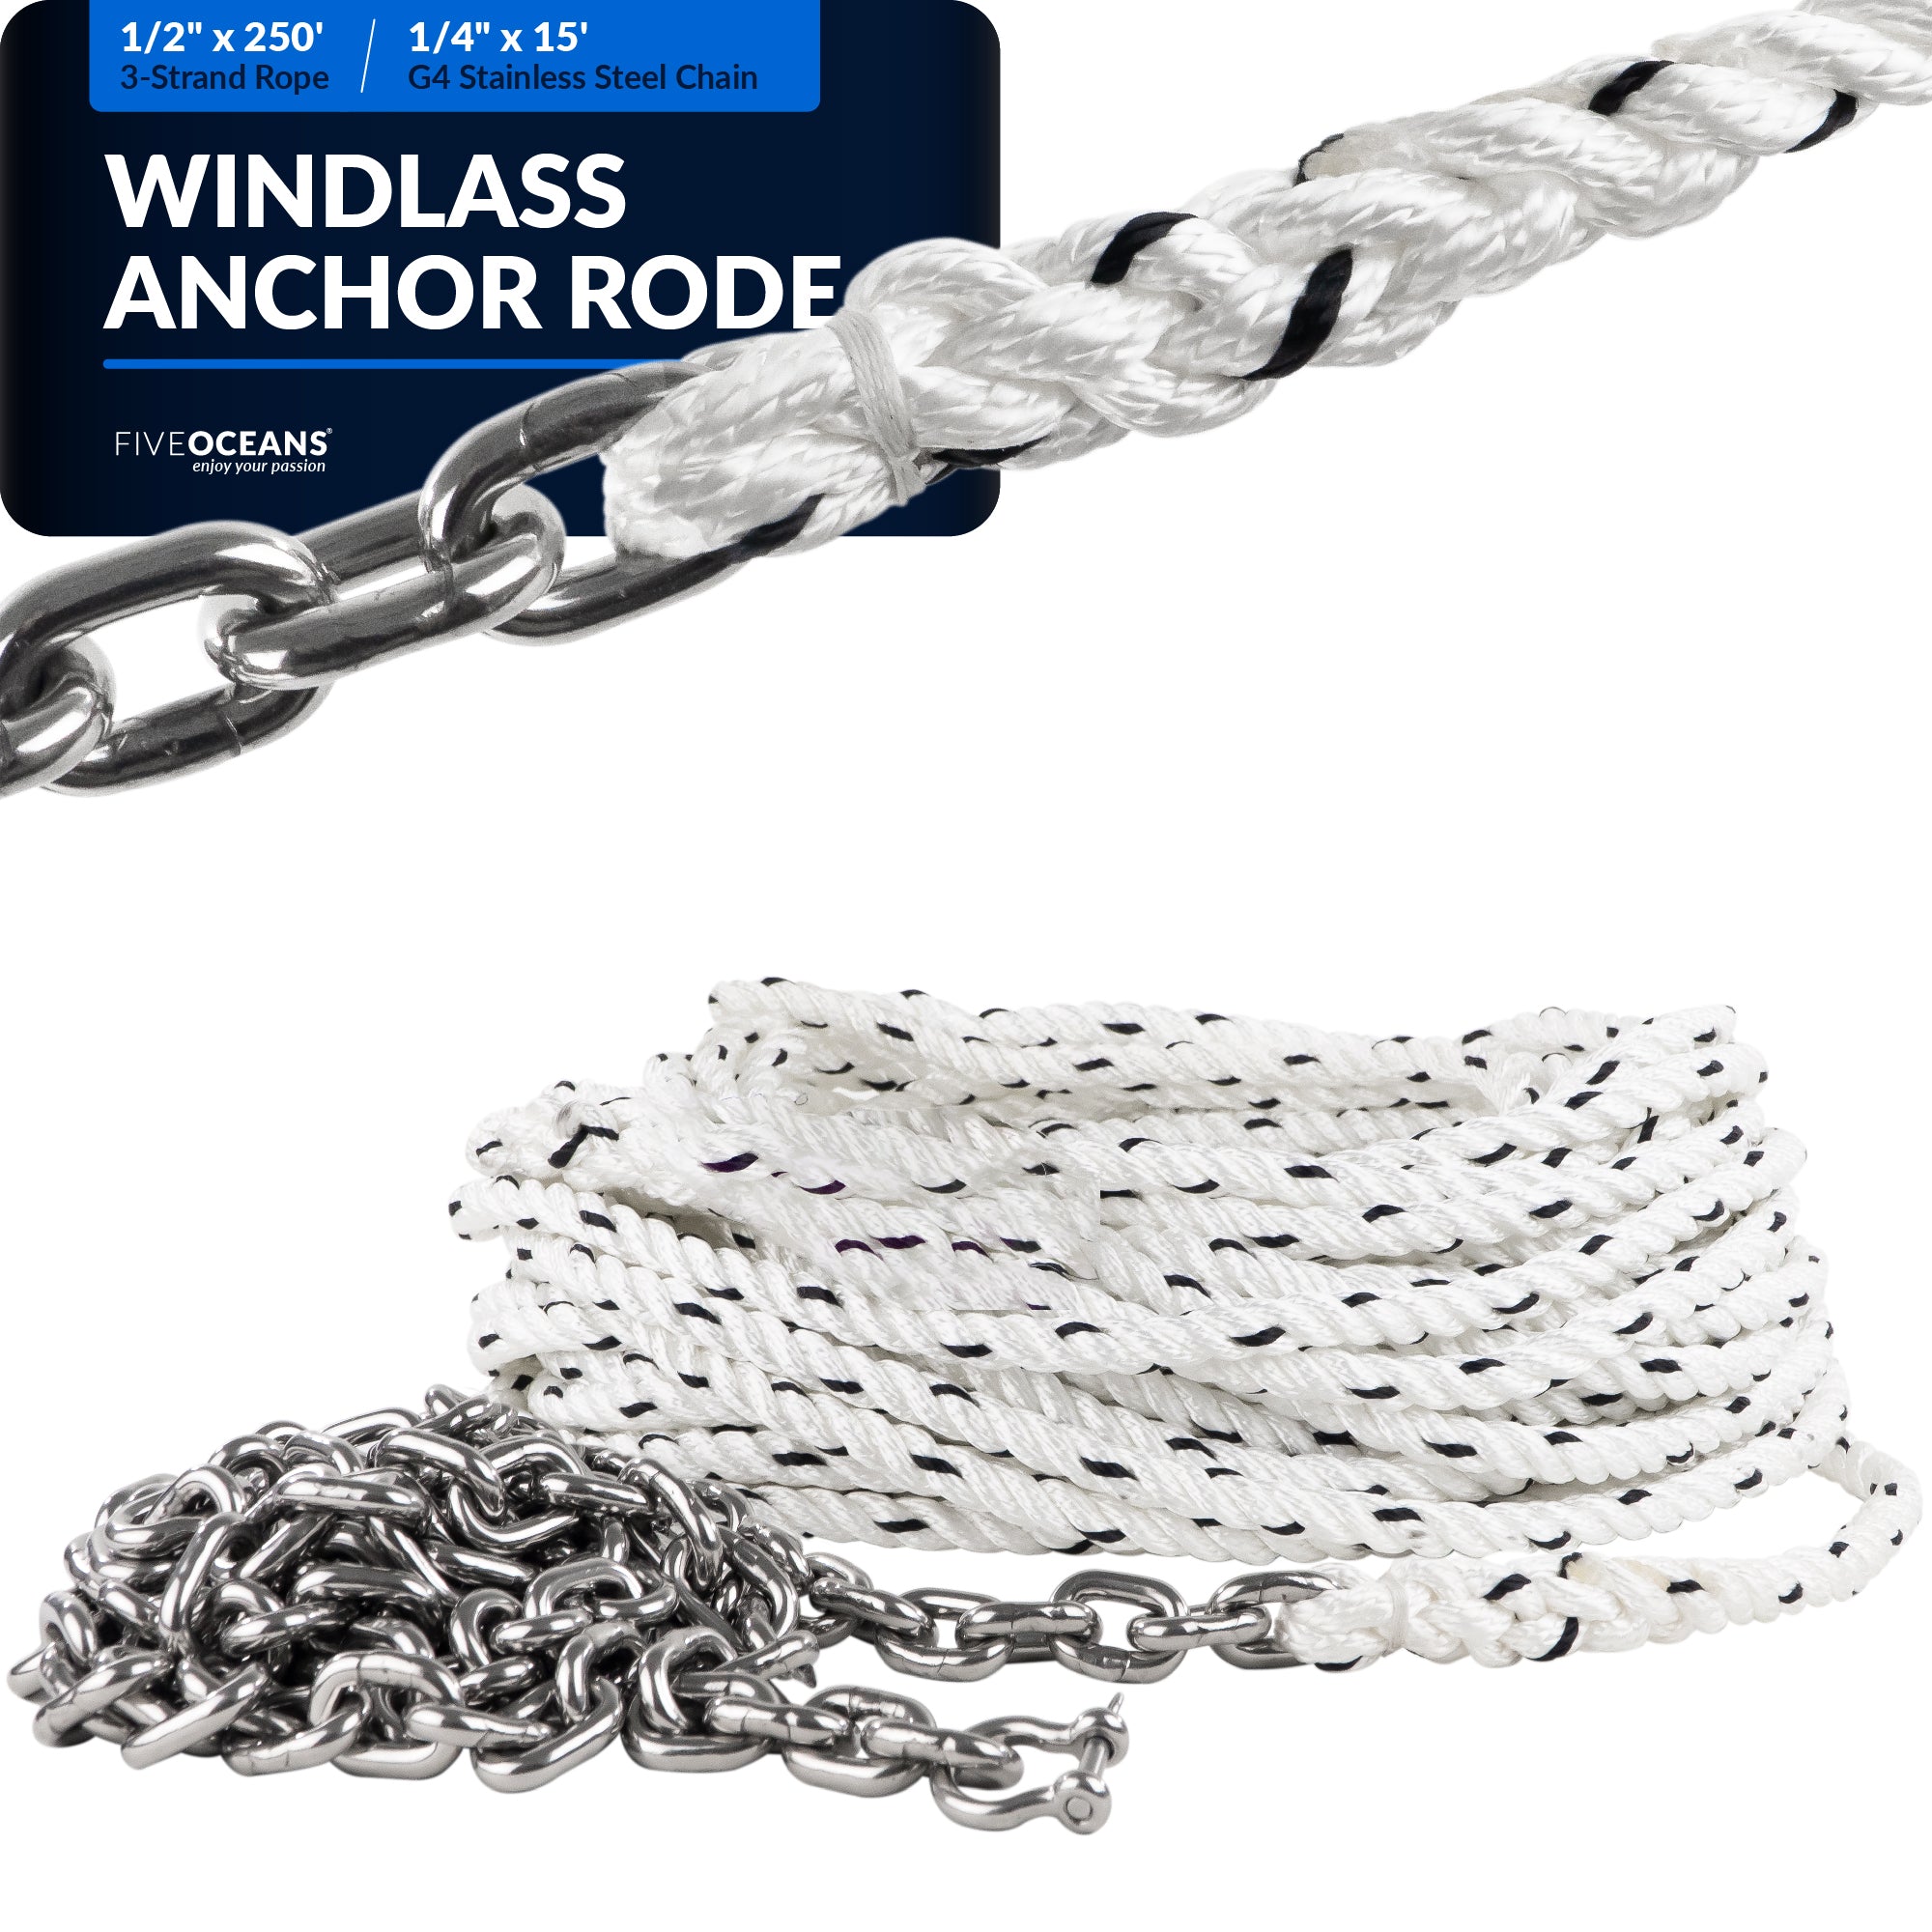 Windlass Anchor Rode, 1/2" x 250' Nylon 3-Strand Rope, 1/4 x 15' G4 Stainless Steel Chain - FO4529